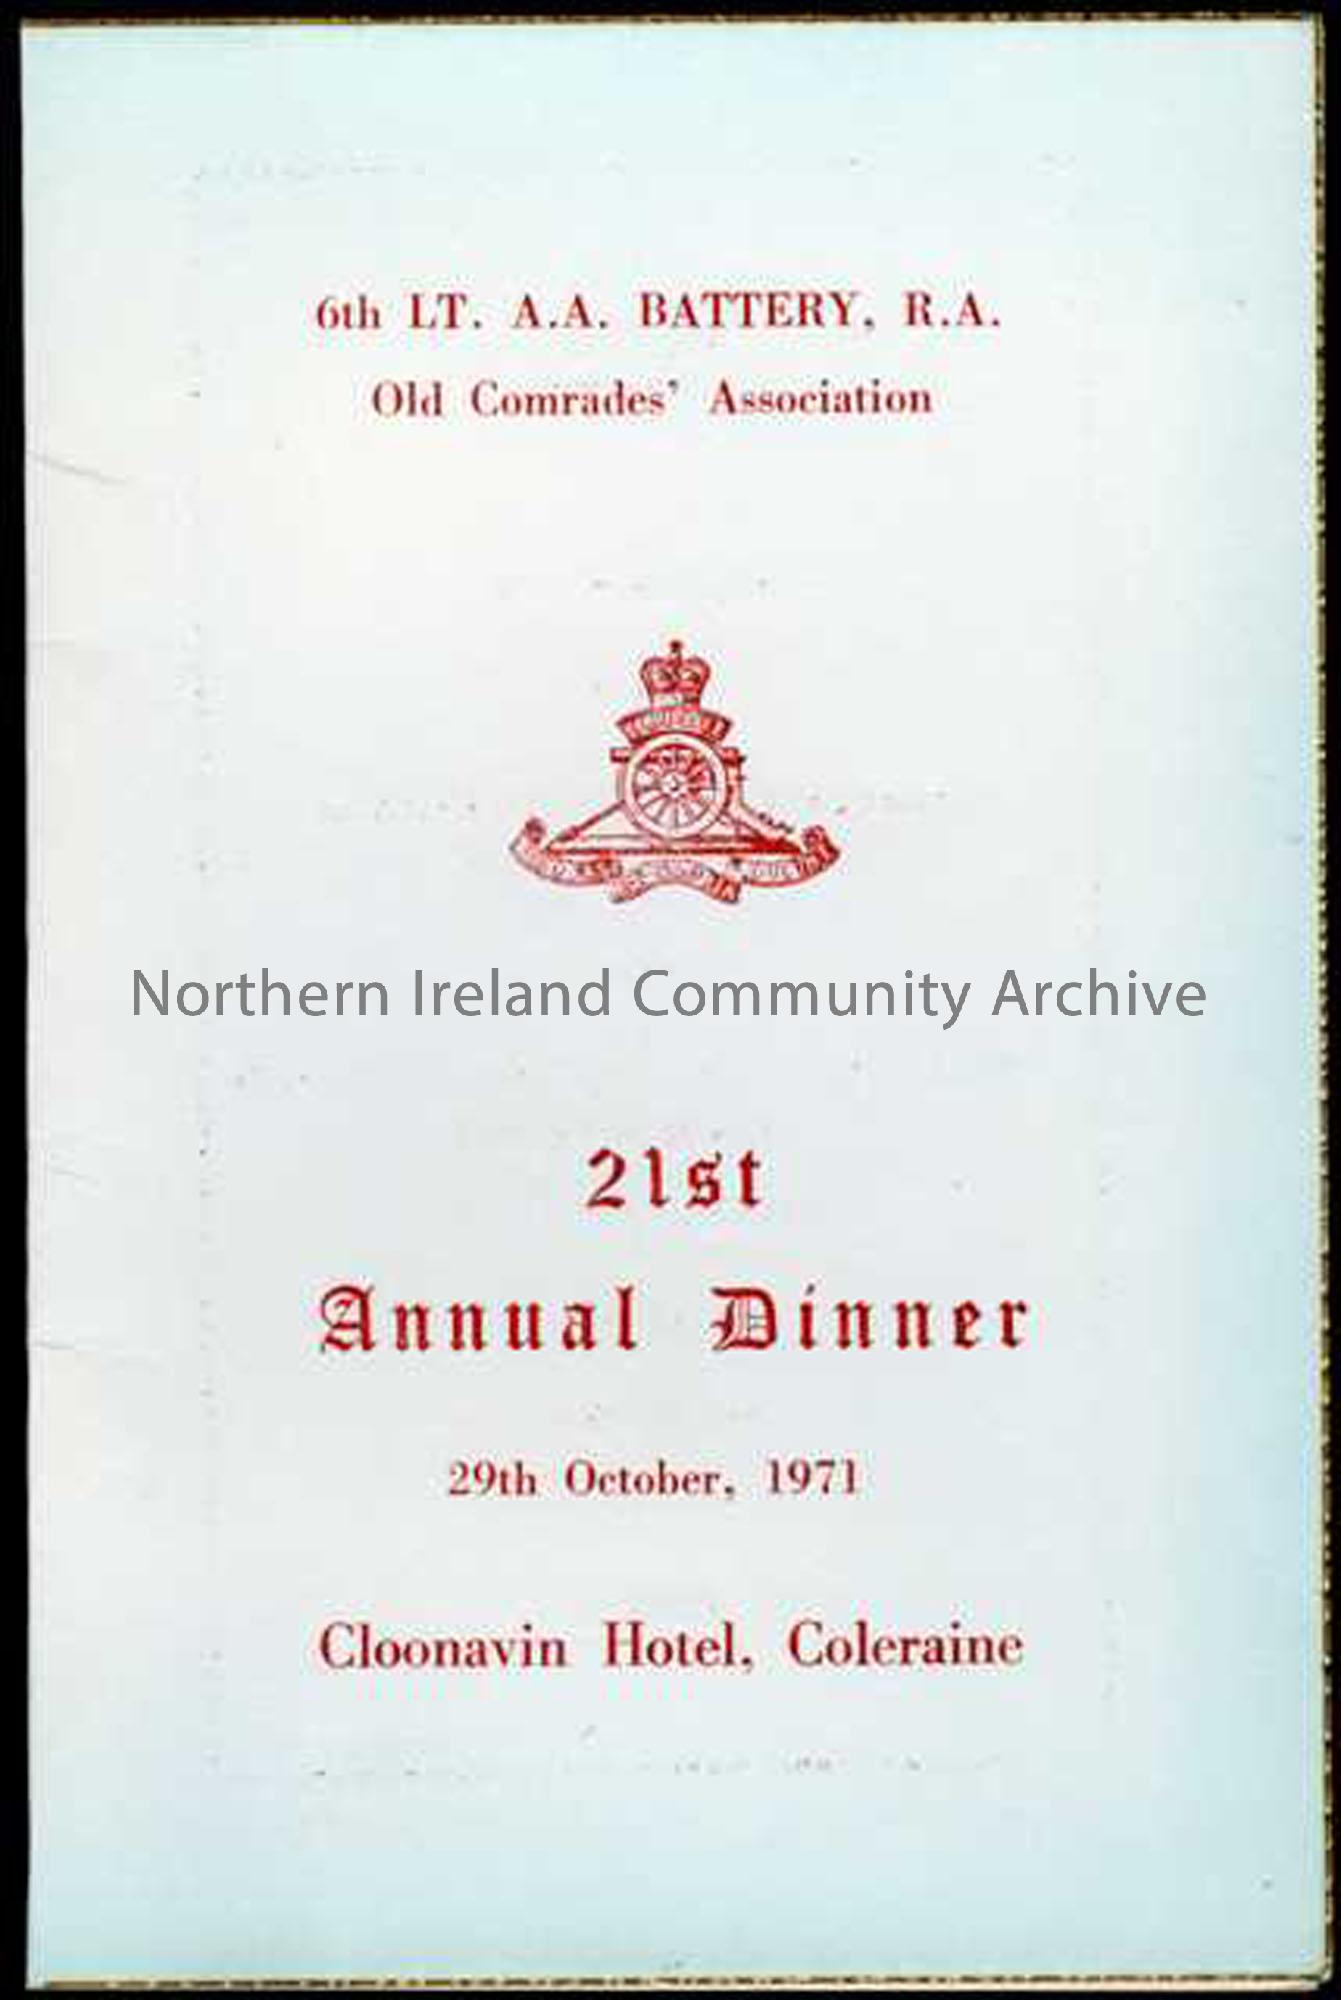 21st Annual reunion dinner leaflet